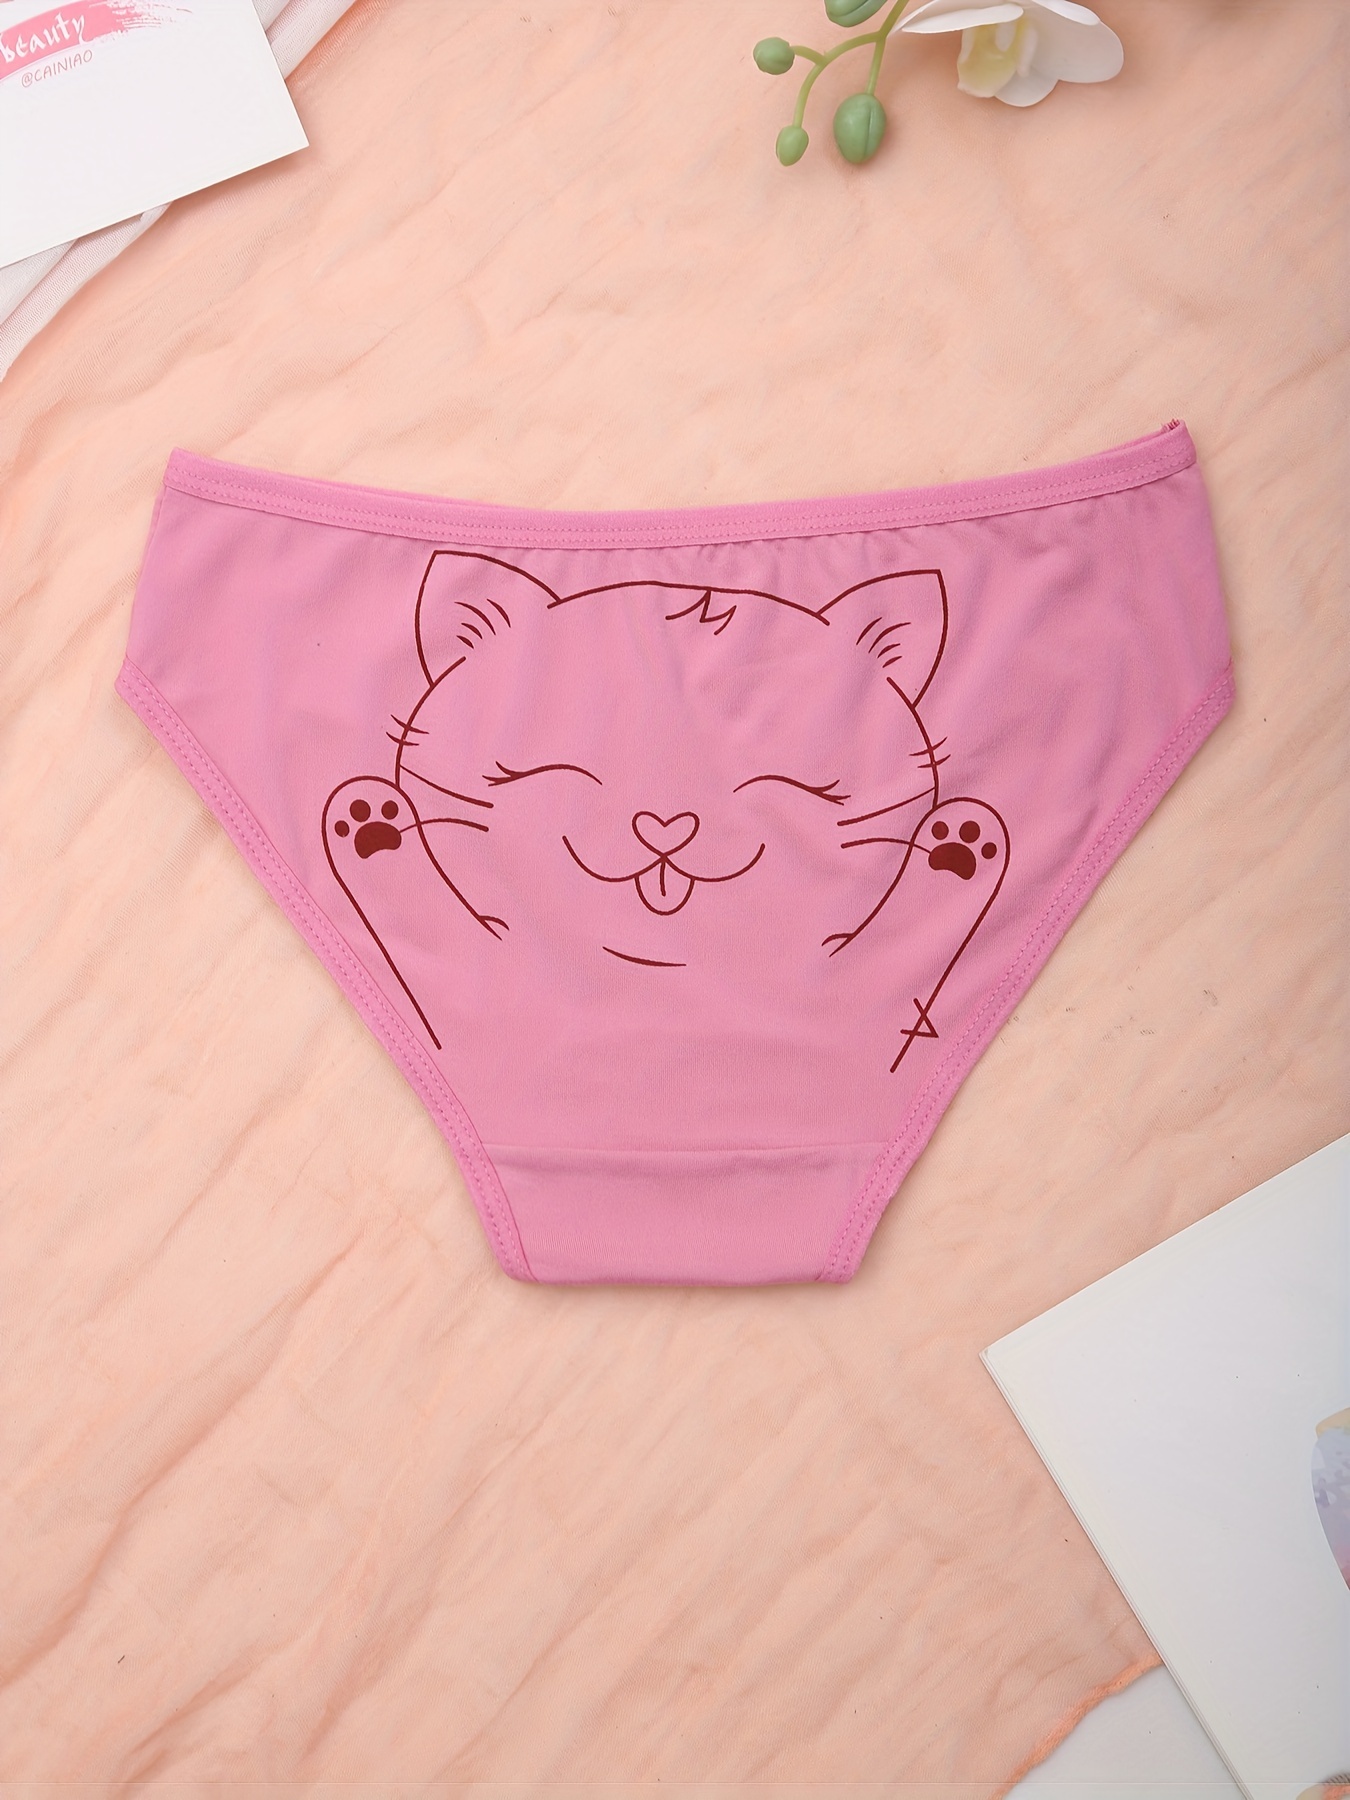 Lingerie Cute Panty Underwear Women Panties Kawaii Cartoon Print